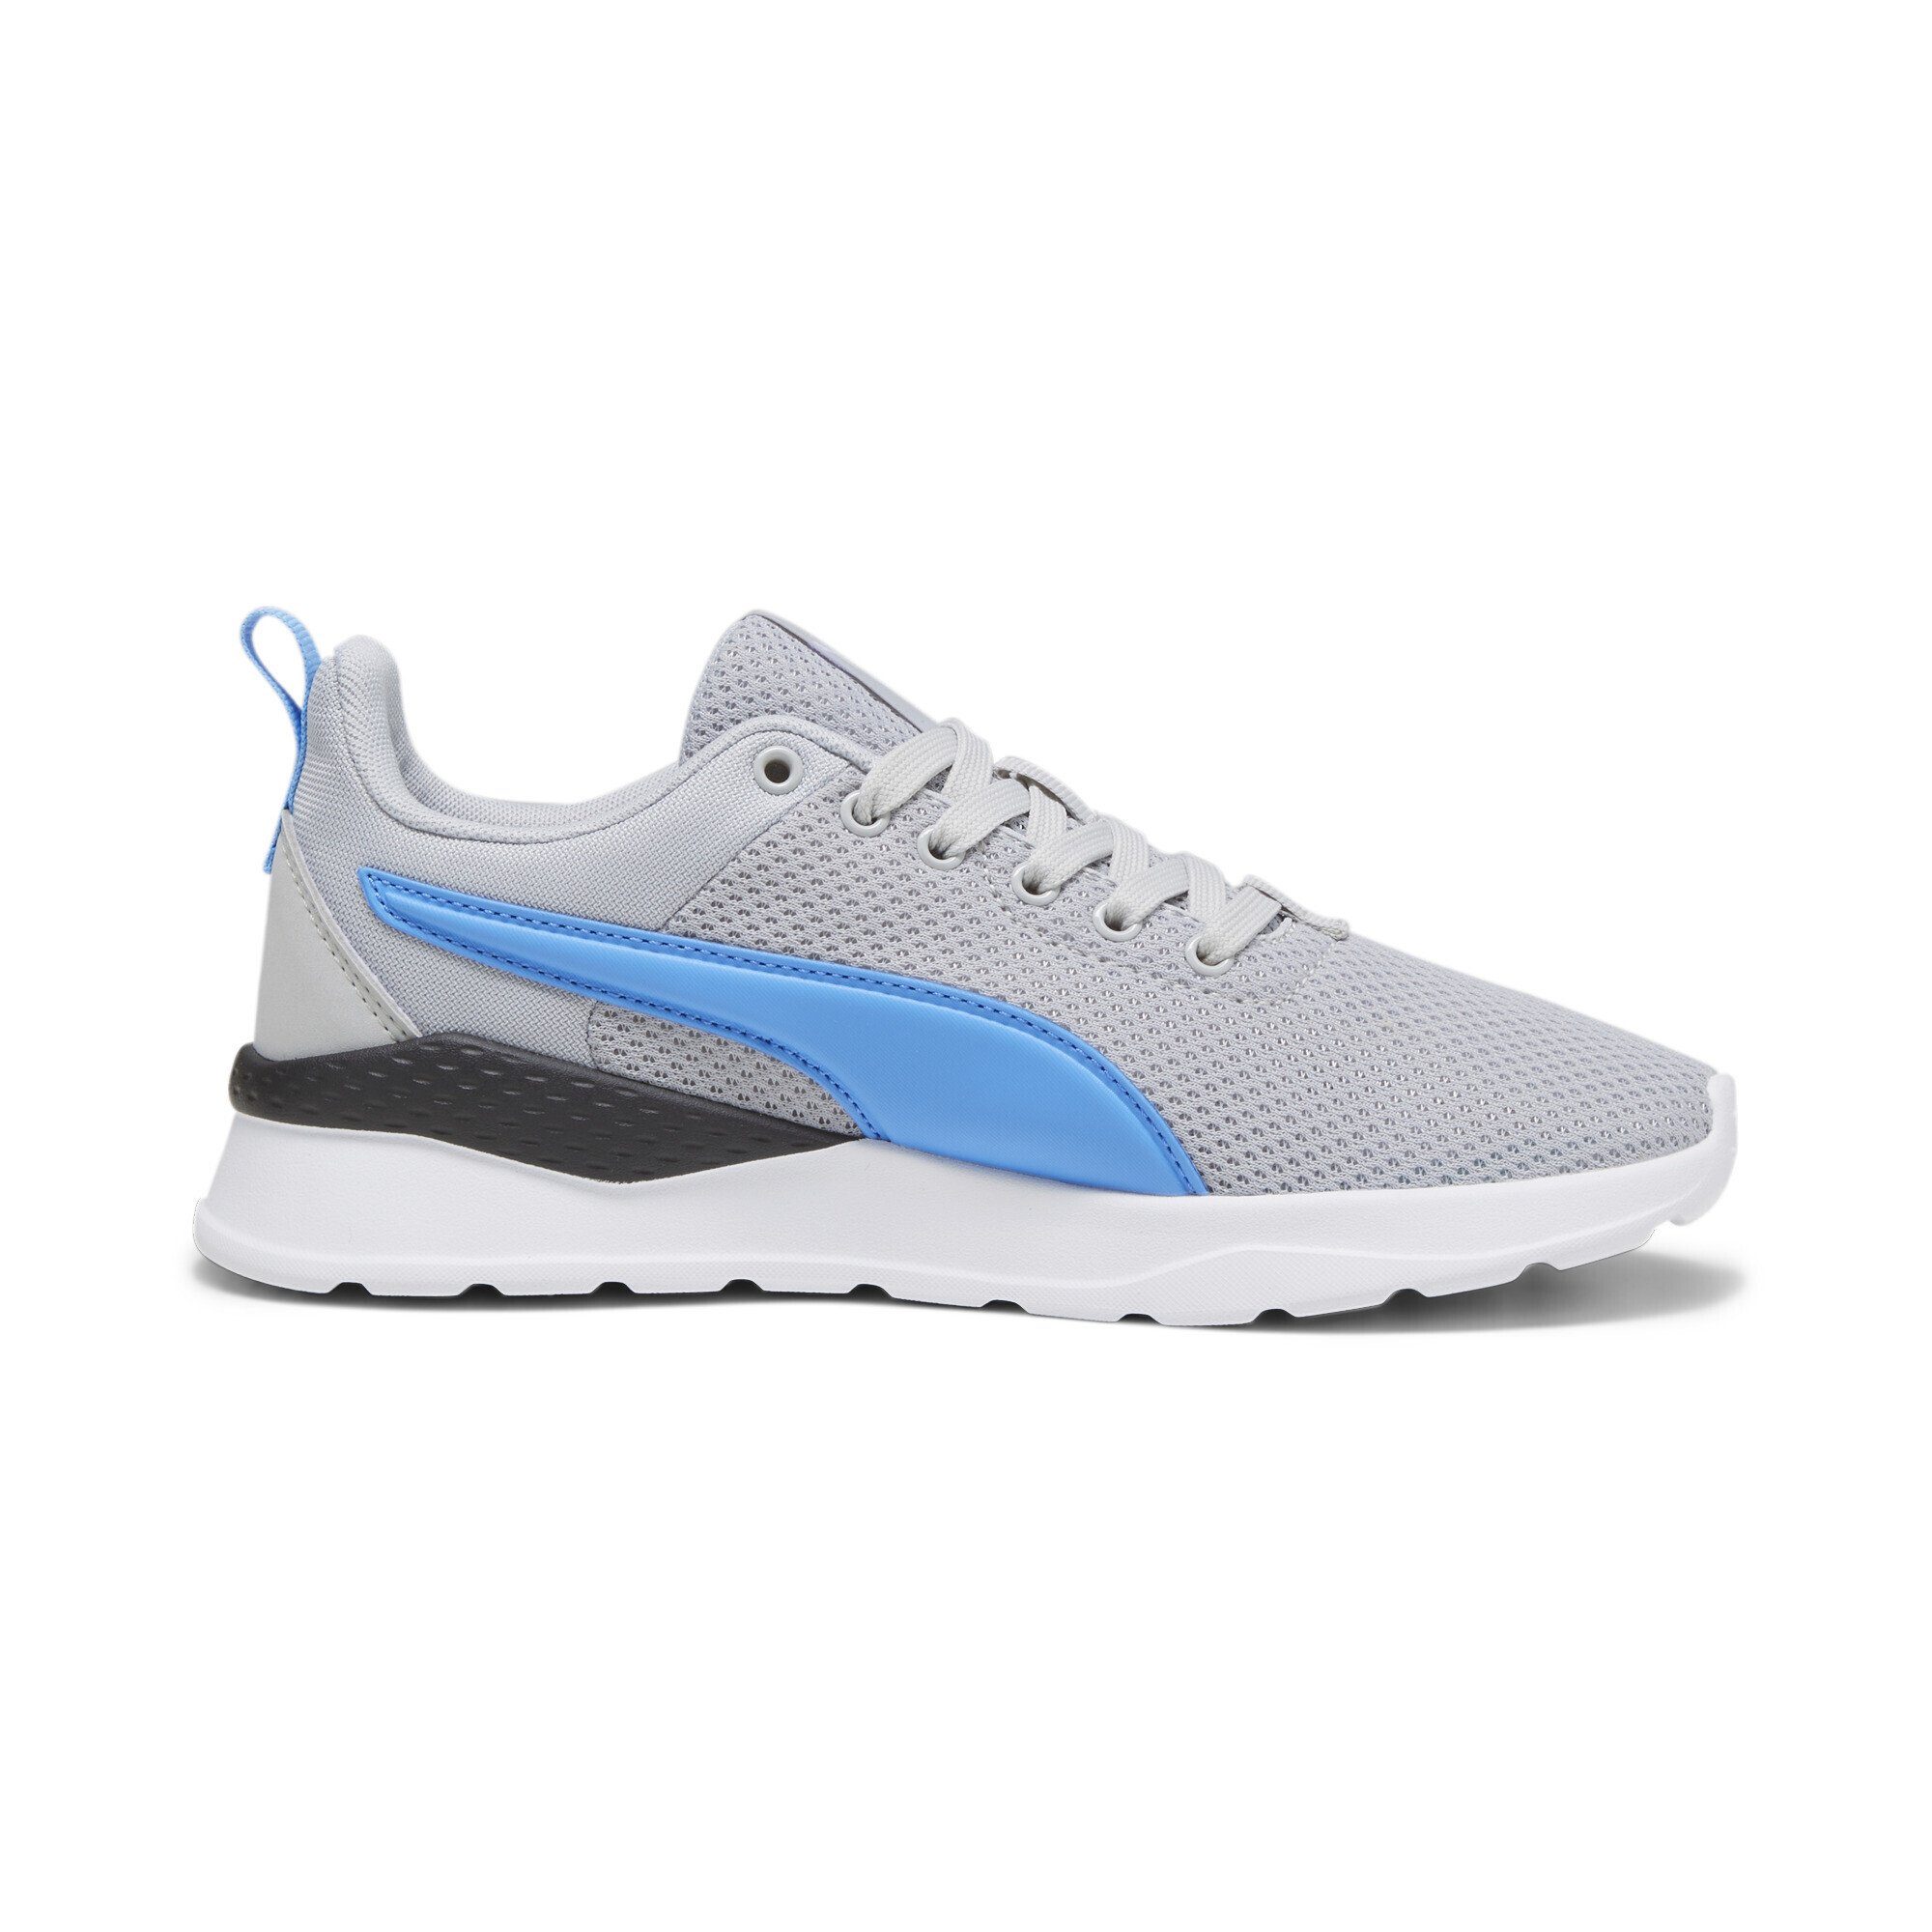 PUMA Anzarun Lite Sneakers Ash Laufschuh Regal Blue Jugendliche White Gray